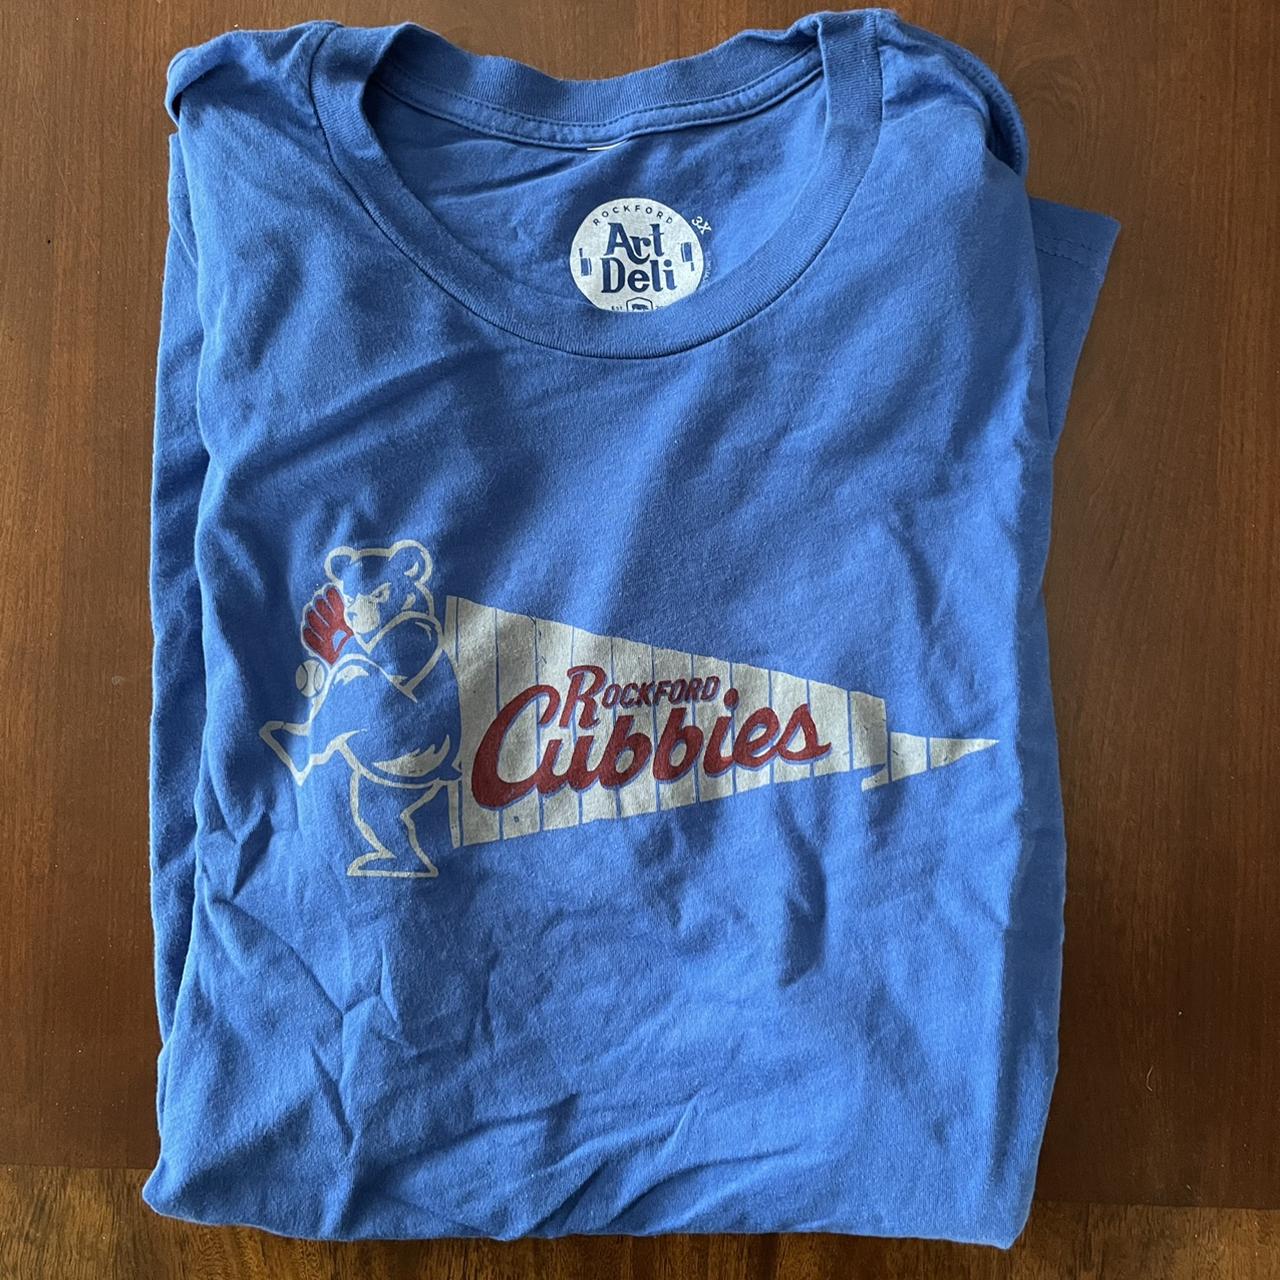 Rockford Cubbies T-Shirt